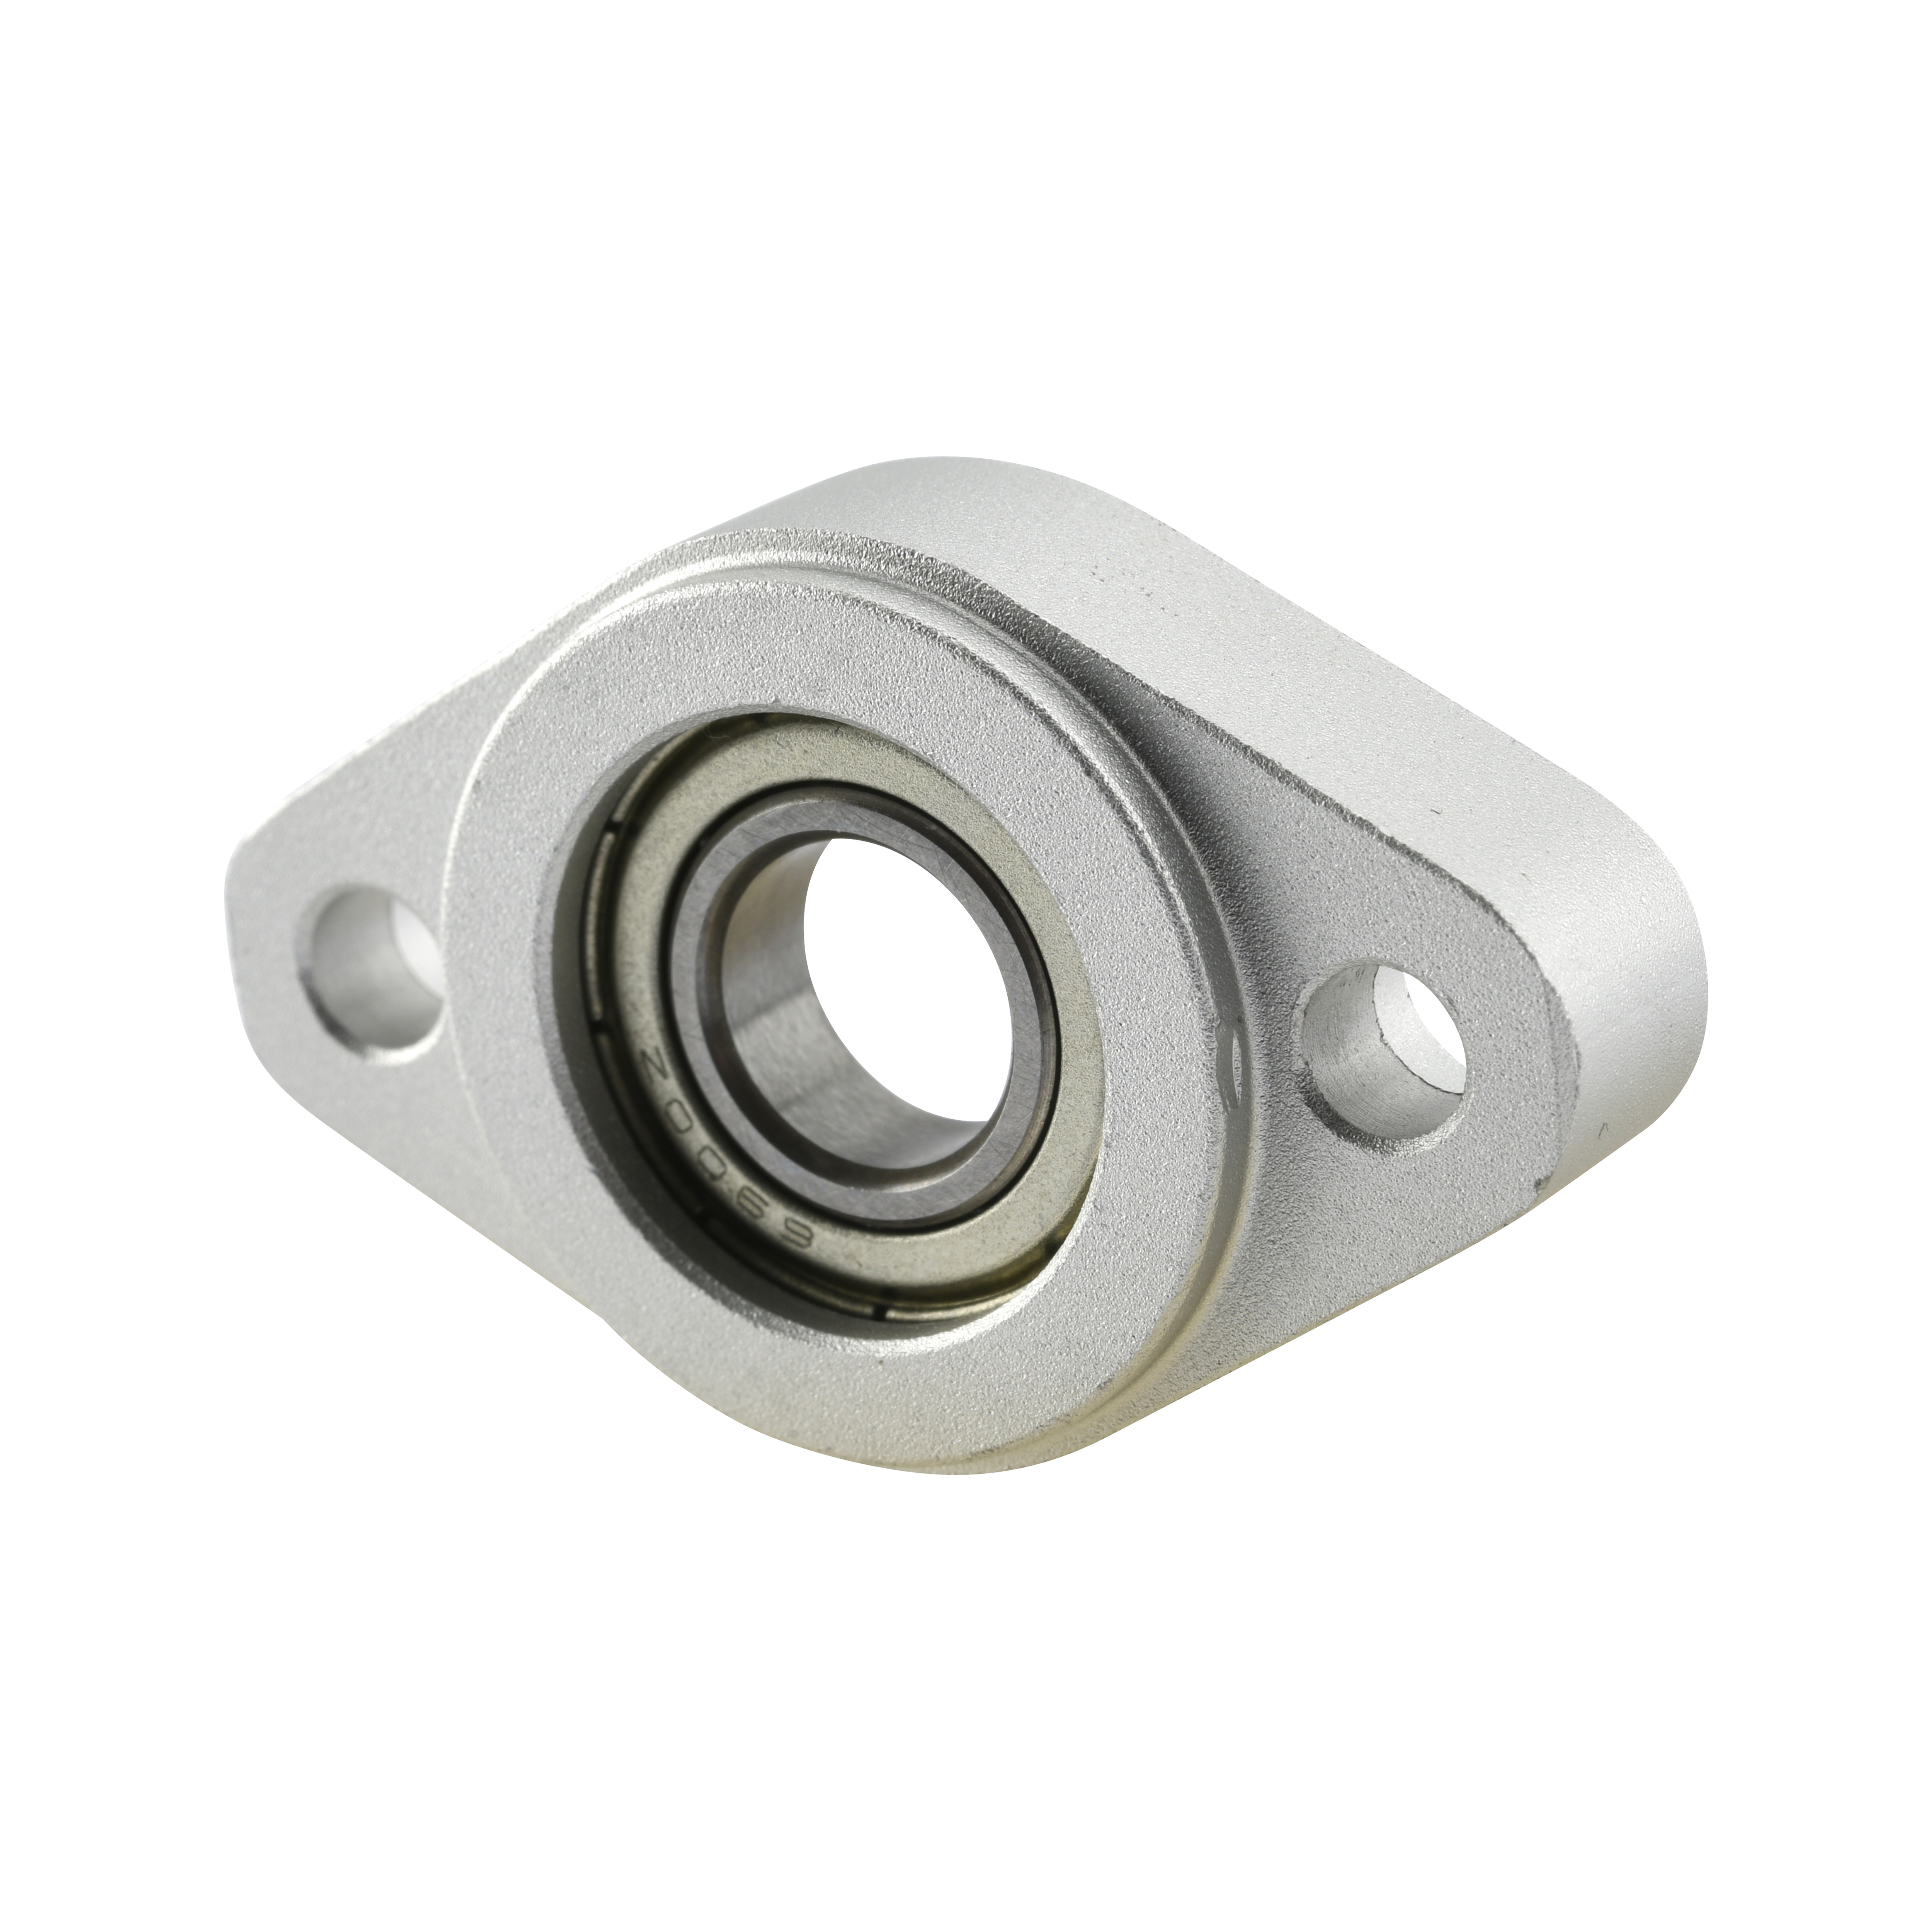 Bearing Housing Set Diamond-Shaped Lightweight Snap Ring Embedded Type